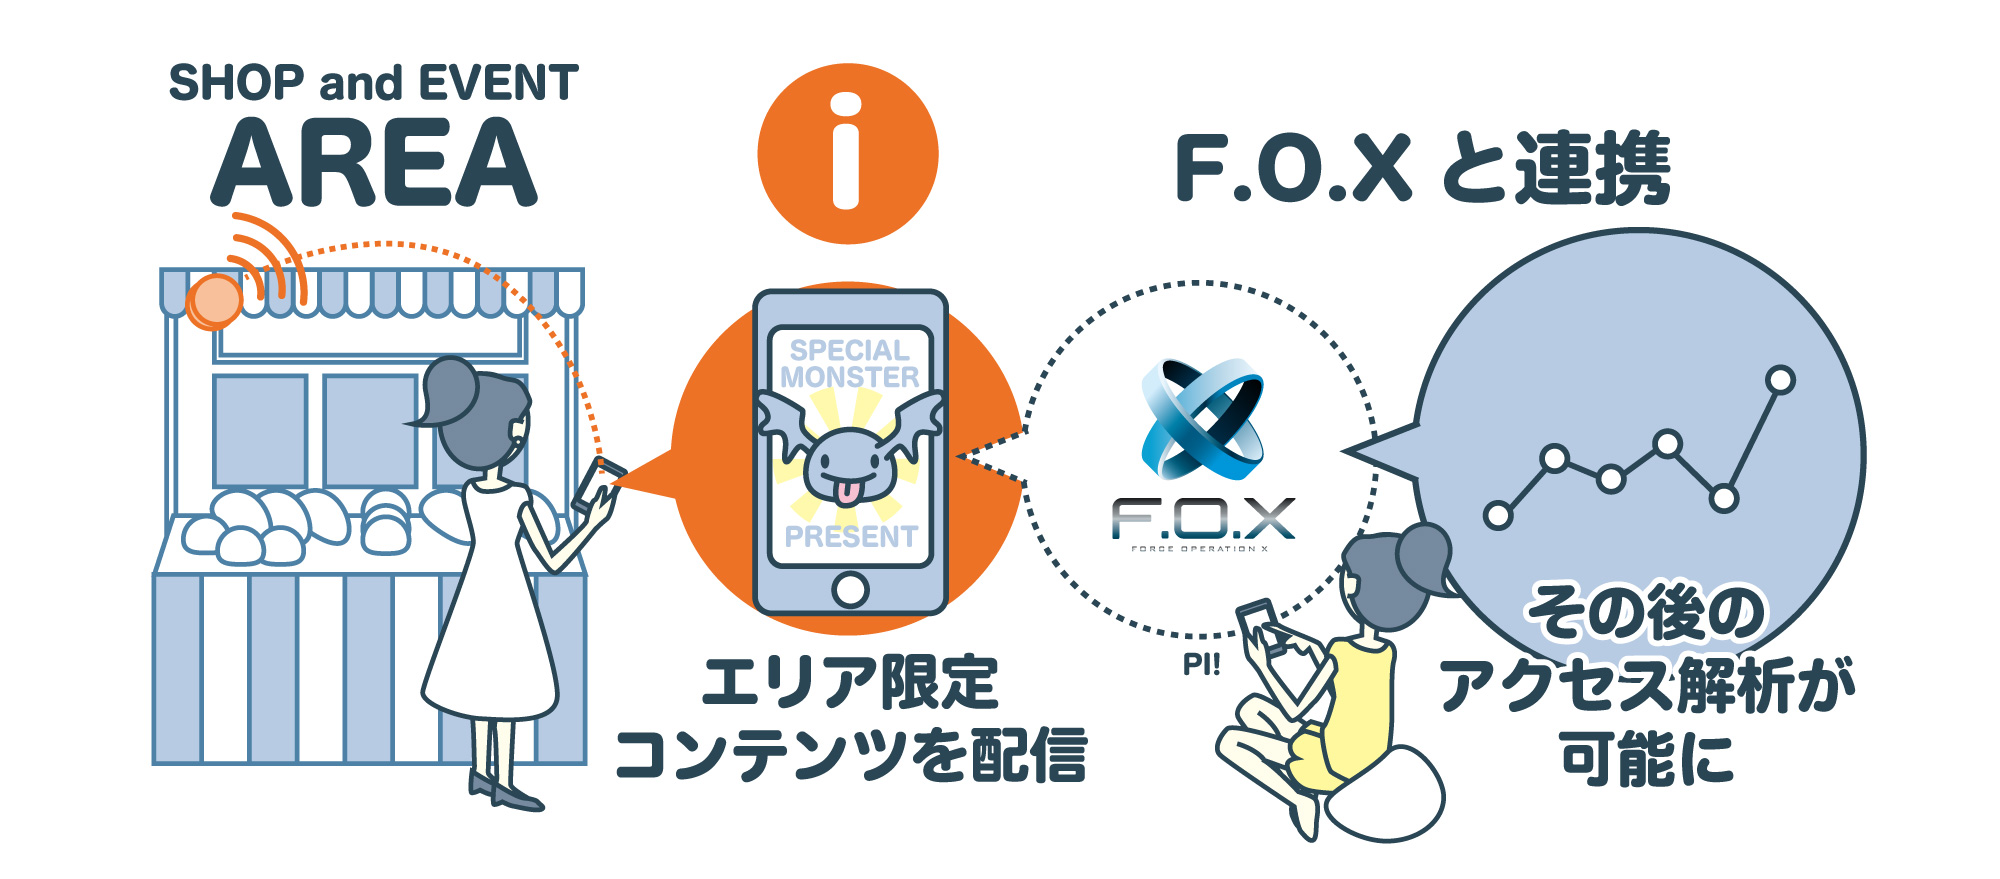 CyberZの「F.O.X」、beacon領域ネットワーク「SWAMP」と連携しリアル行動とアプリを連動した効果計測が可能に